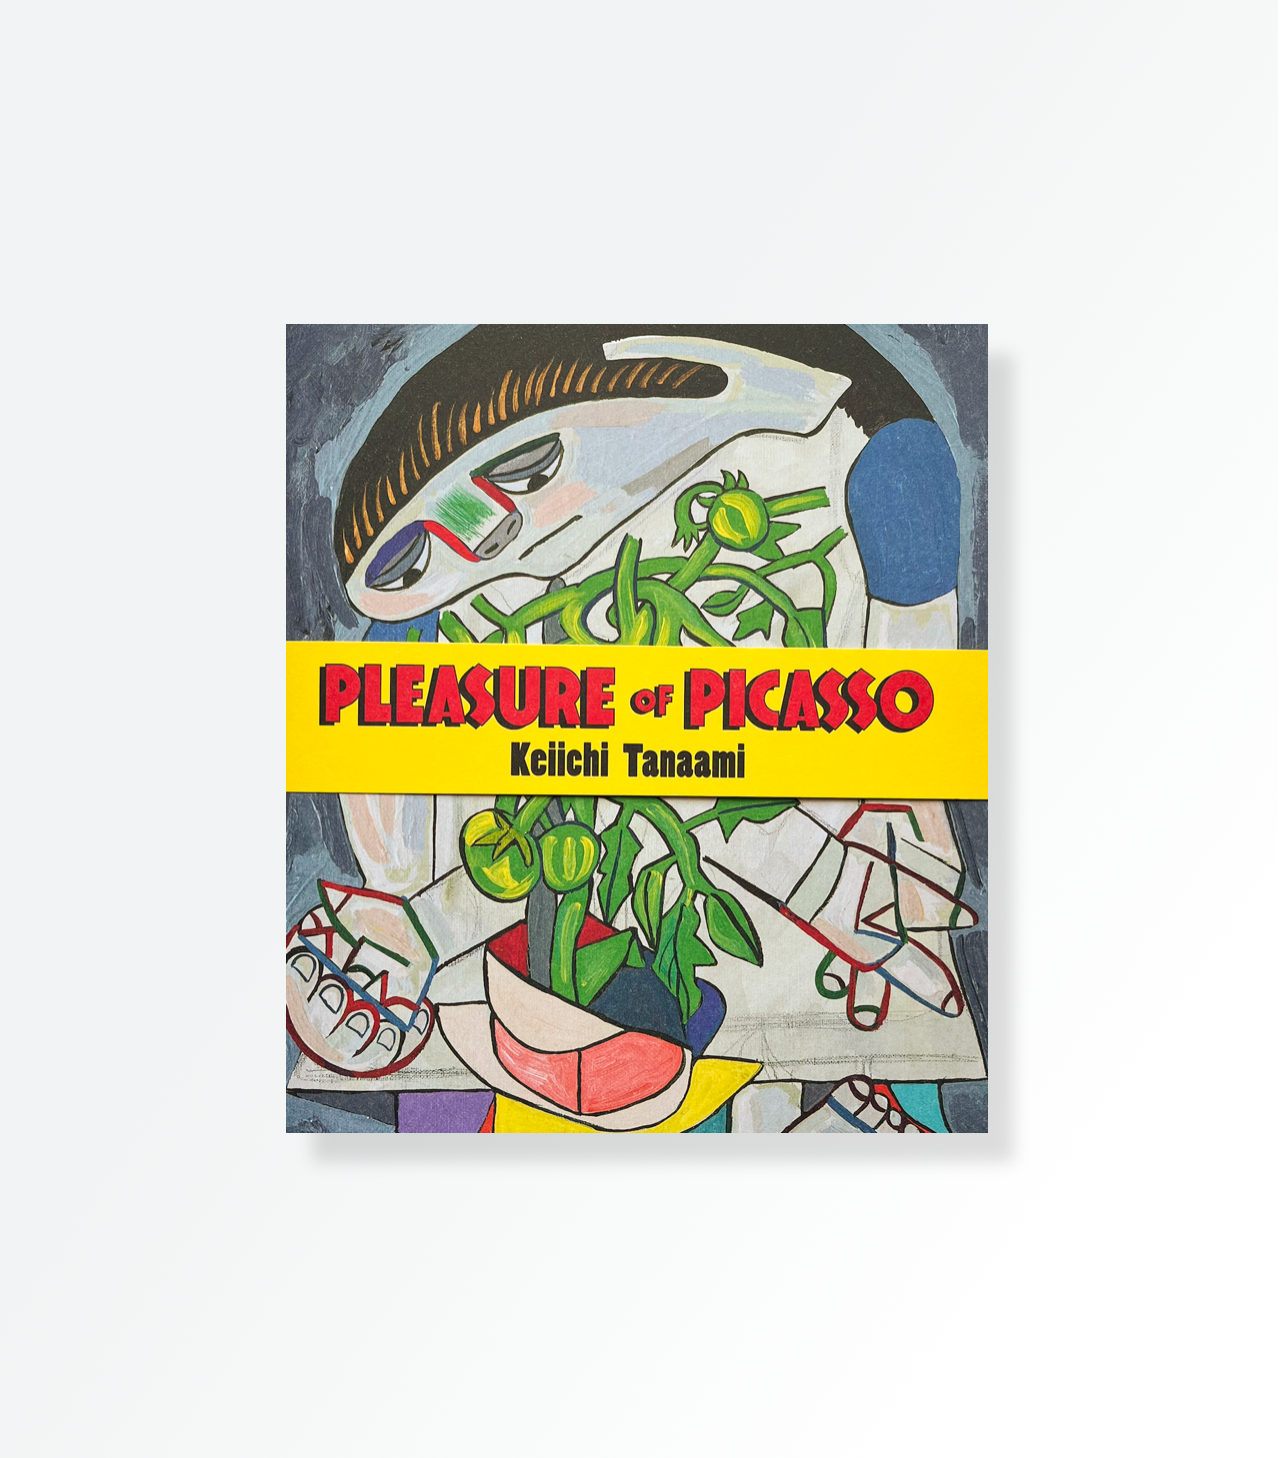 Pleasure of Picasso